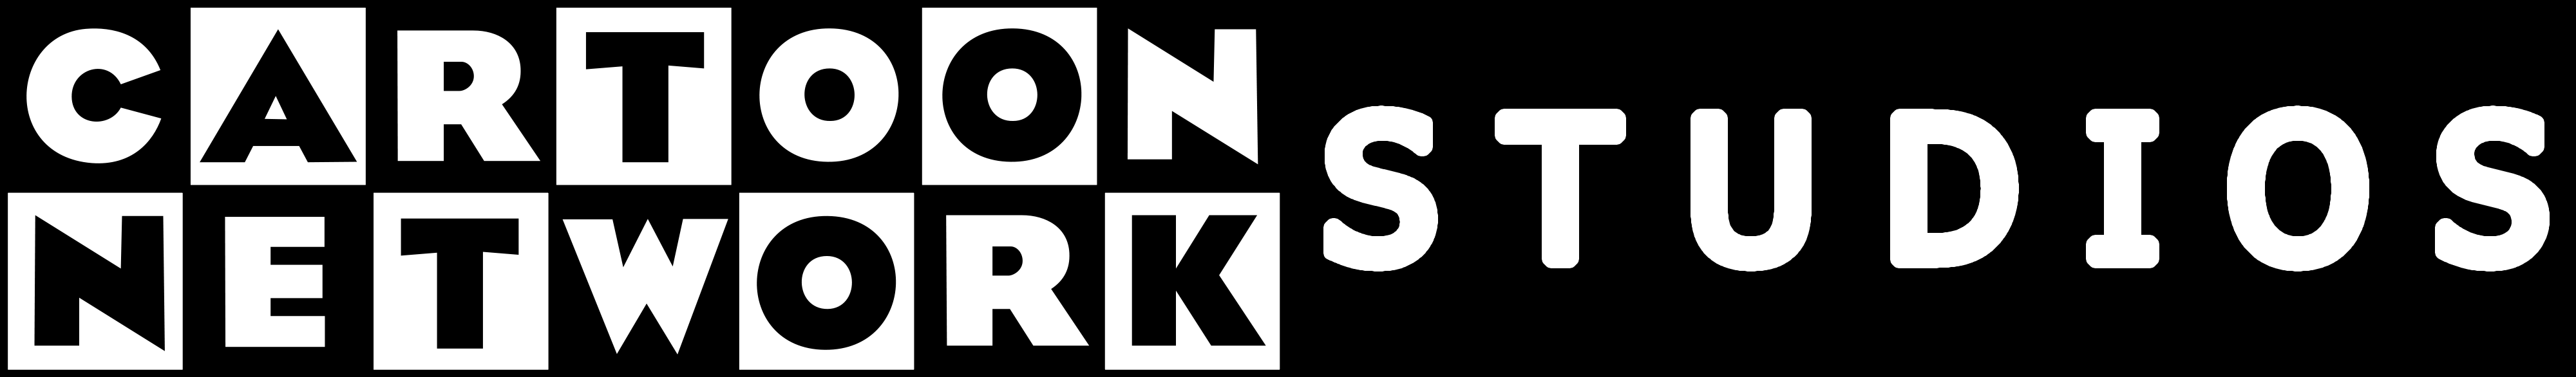 Cartoon Network Studios Logo - File:Cartoon Network Studios 2nd logo.png - Wikimedia Commons